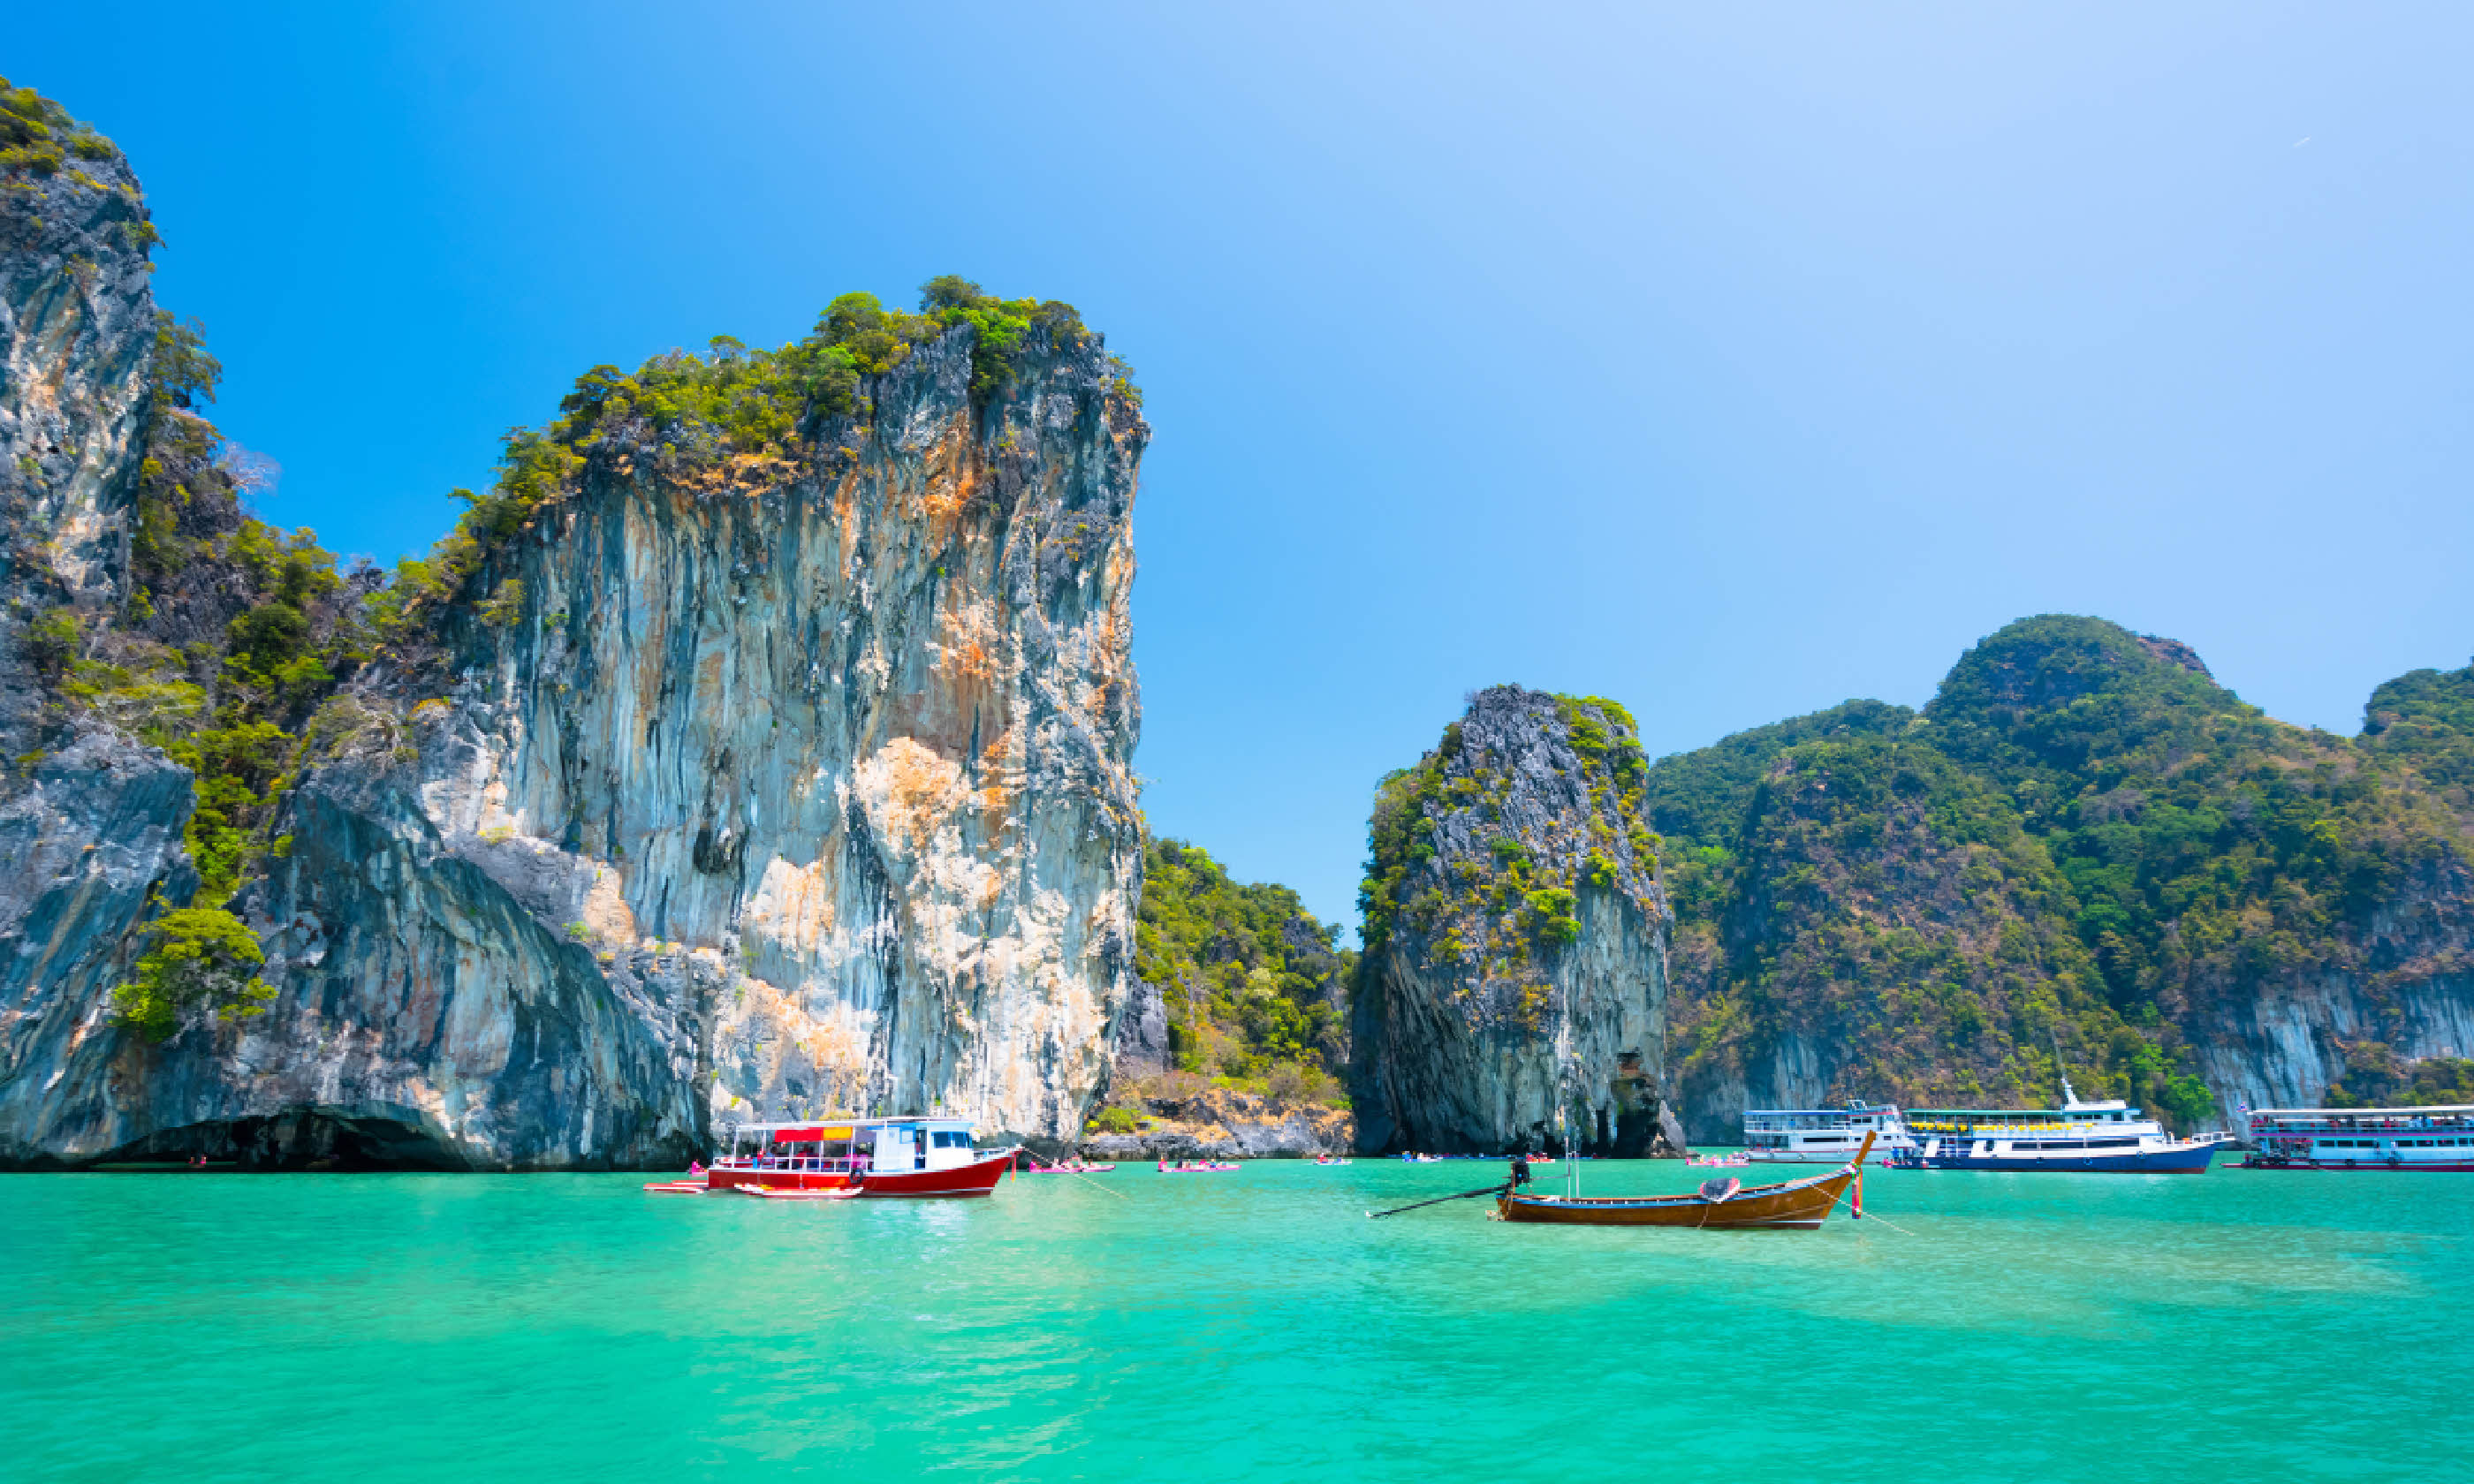 Phuket, Thailand (Shutterstock)